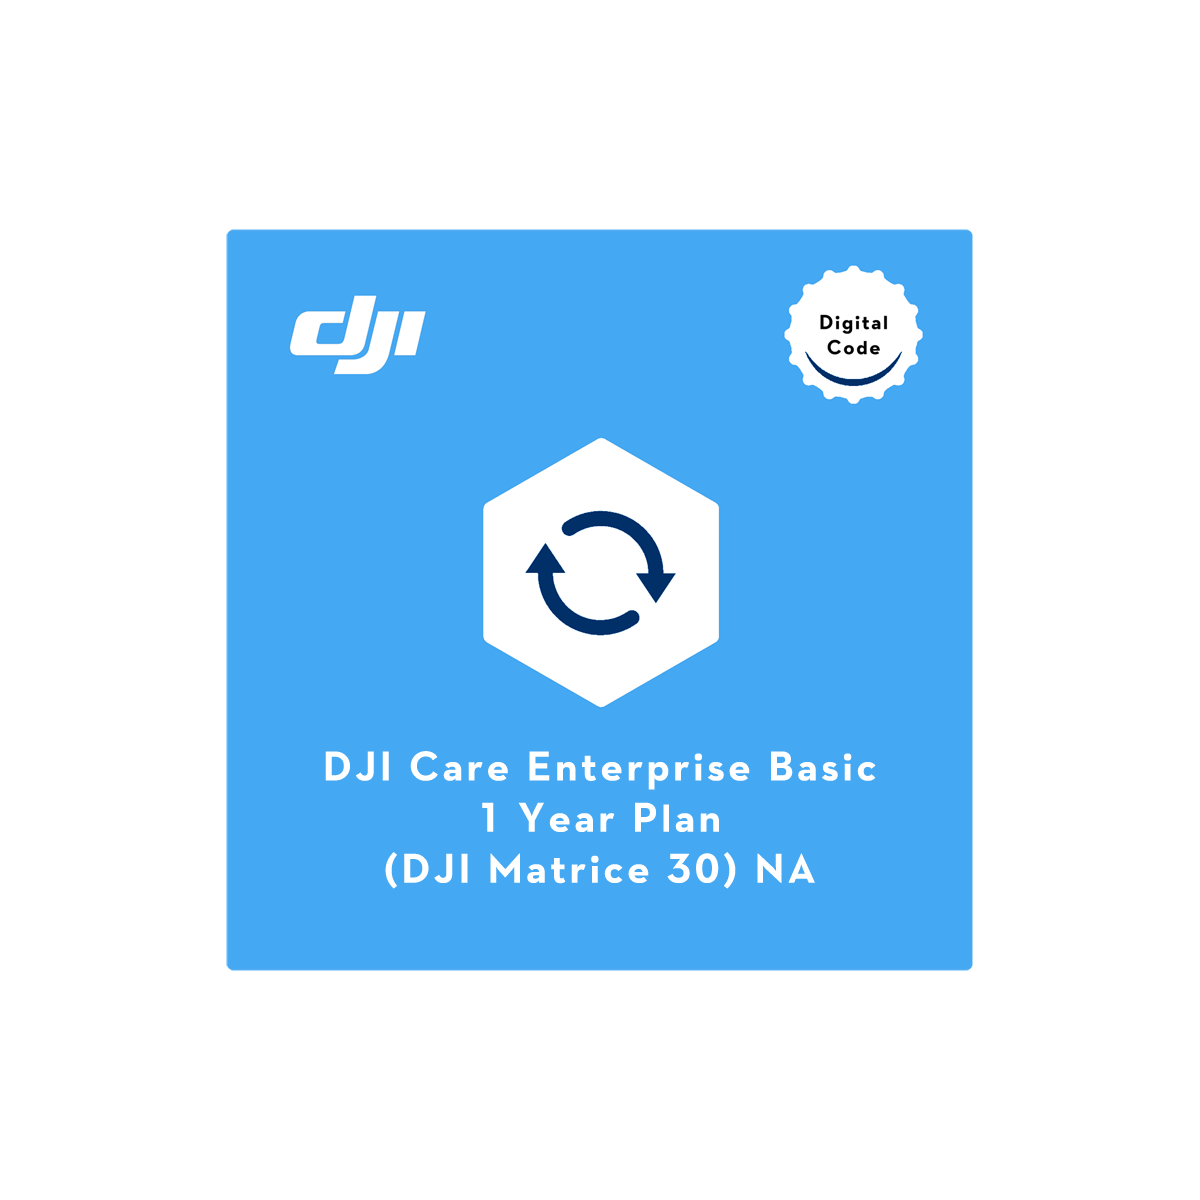 DJI Care Enterprise Basic (M30) NA